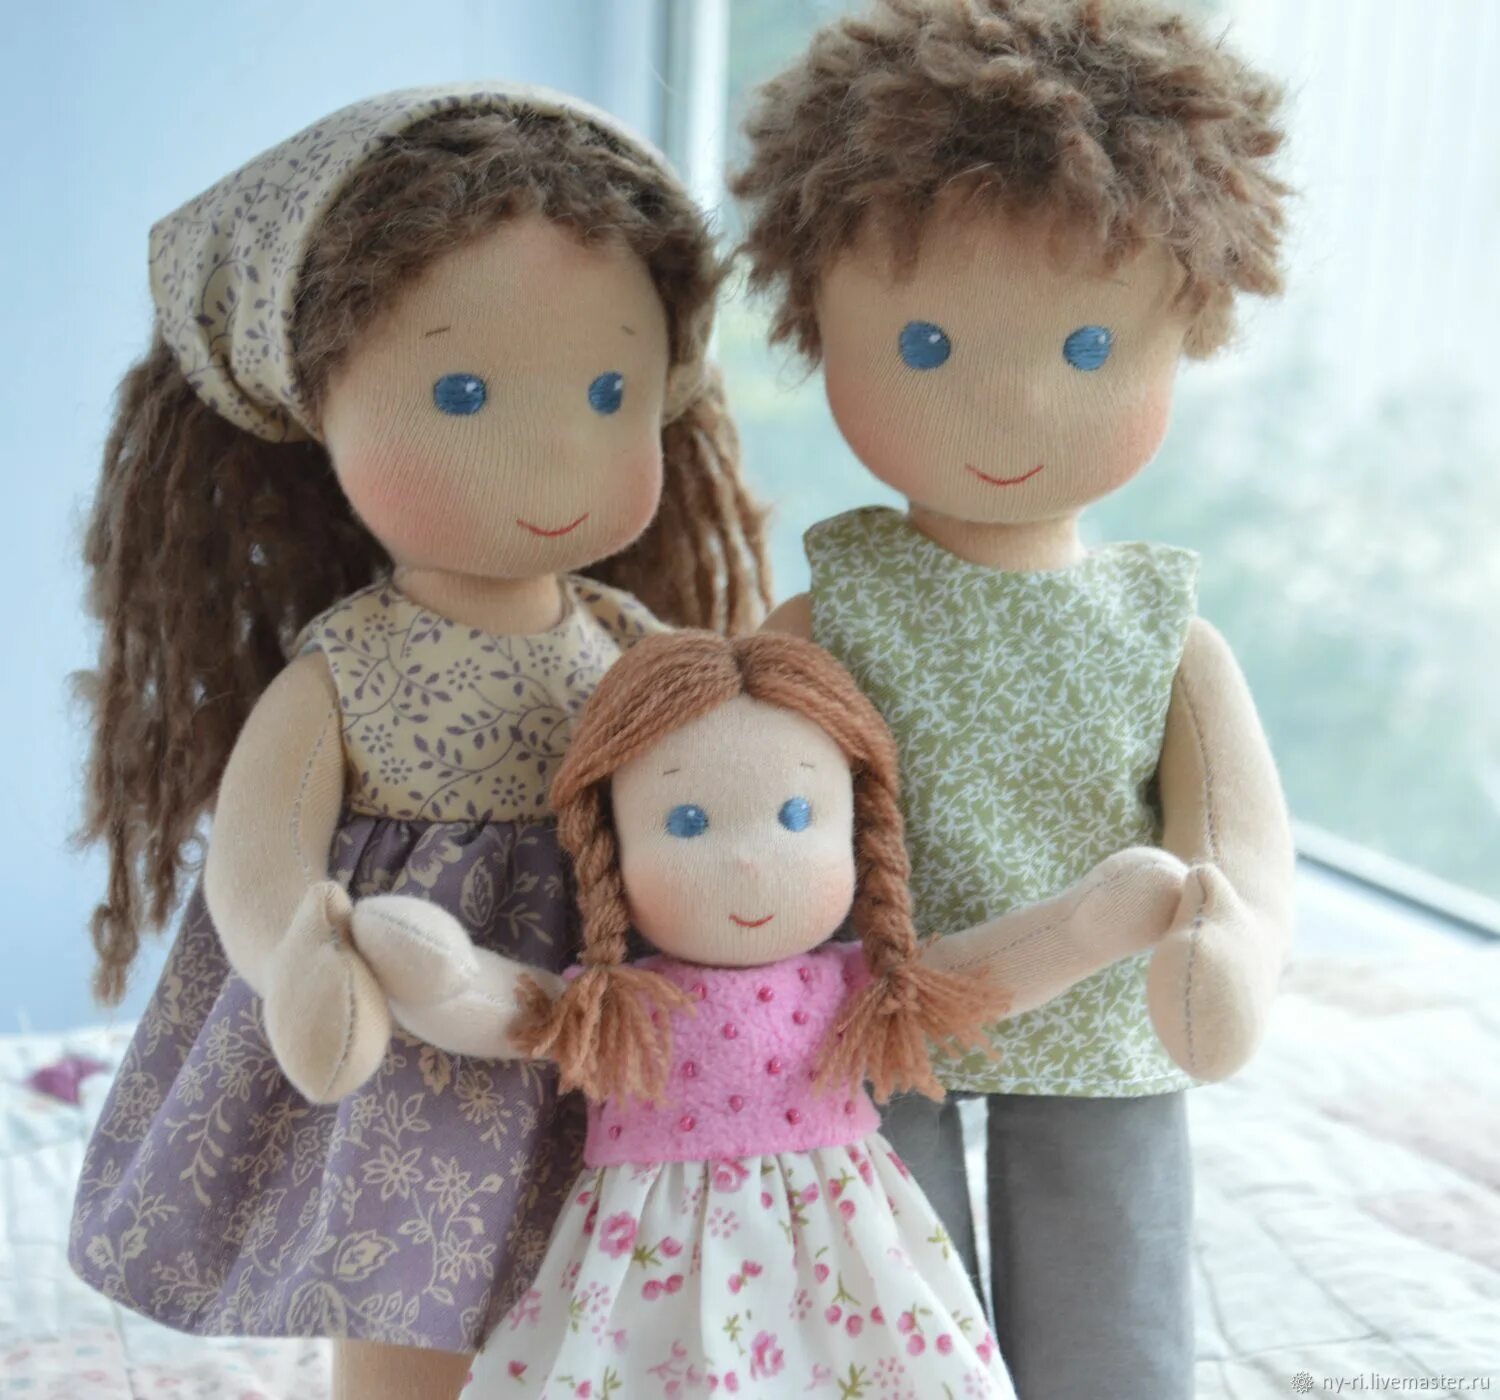 Дочка куколка. Вальдорфская кукла. Вальдорфская кукла в детском саду. Вальдорфская кукла семья. Кукла дочка.